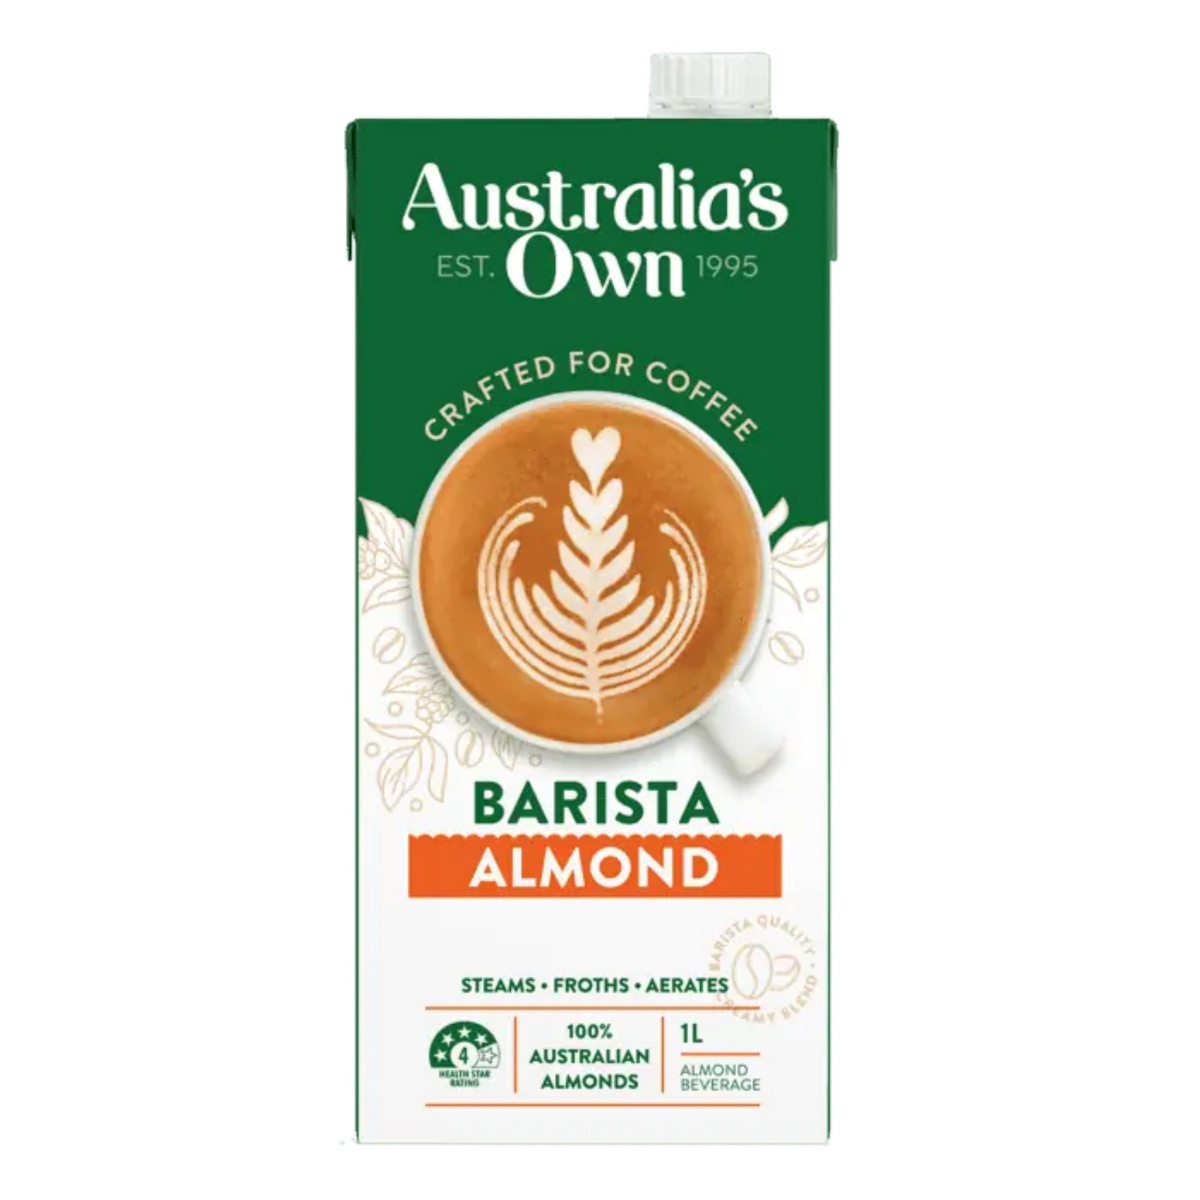 Australia's Own Barista Almond Milk 1 Litre